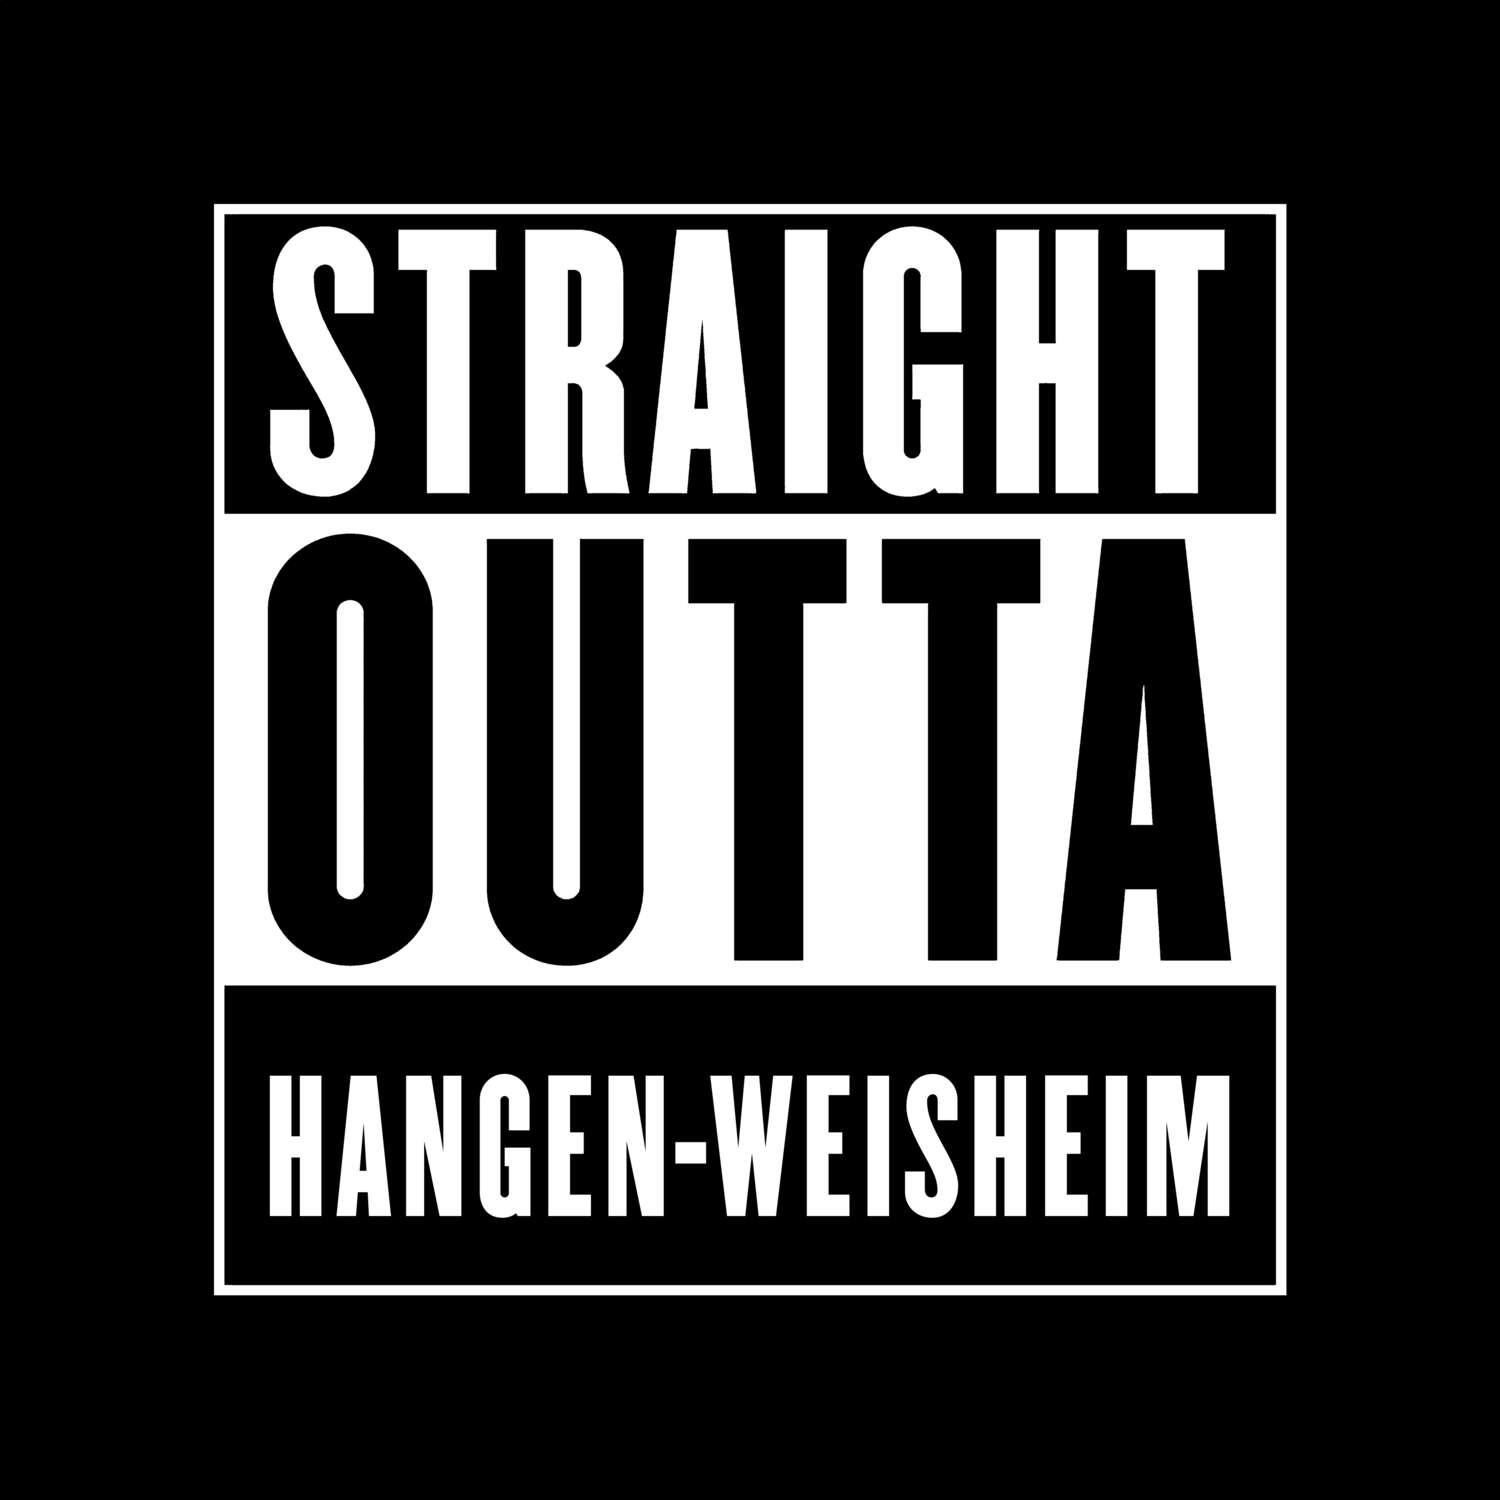 Hangen-Weisheim T-Shirt »Straight Outta«